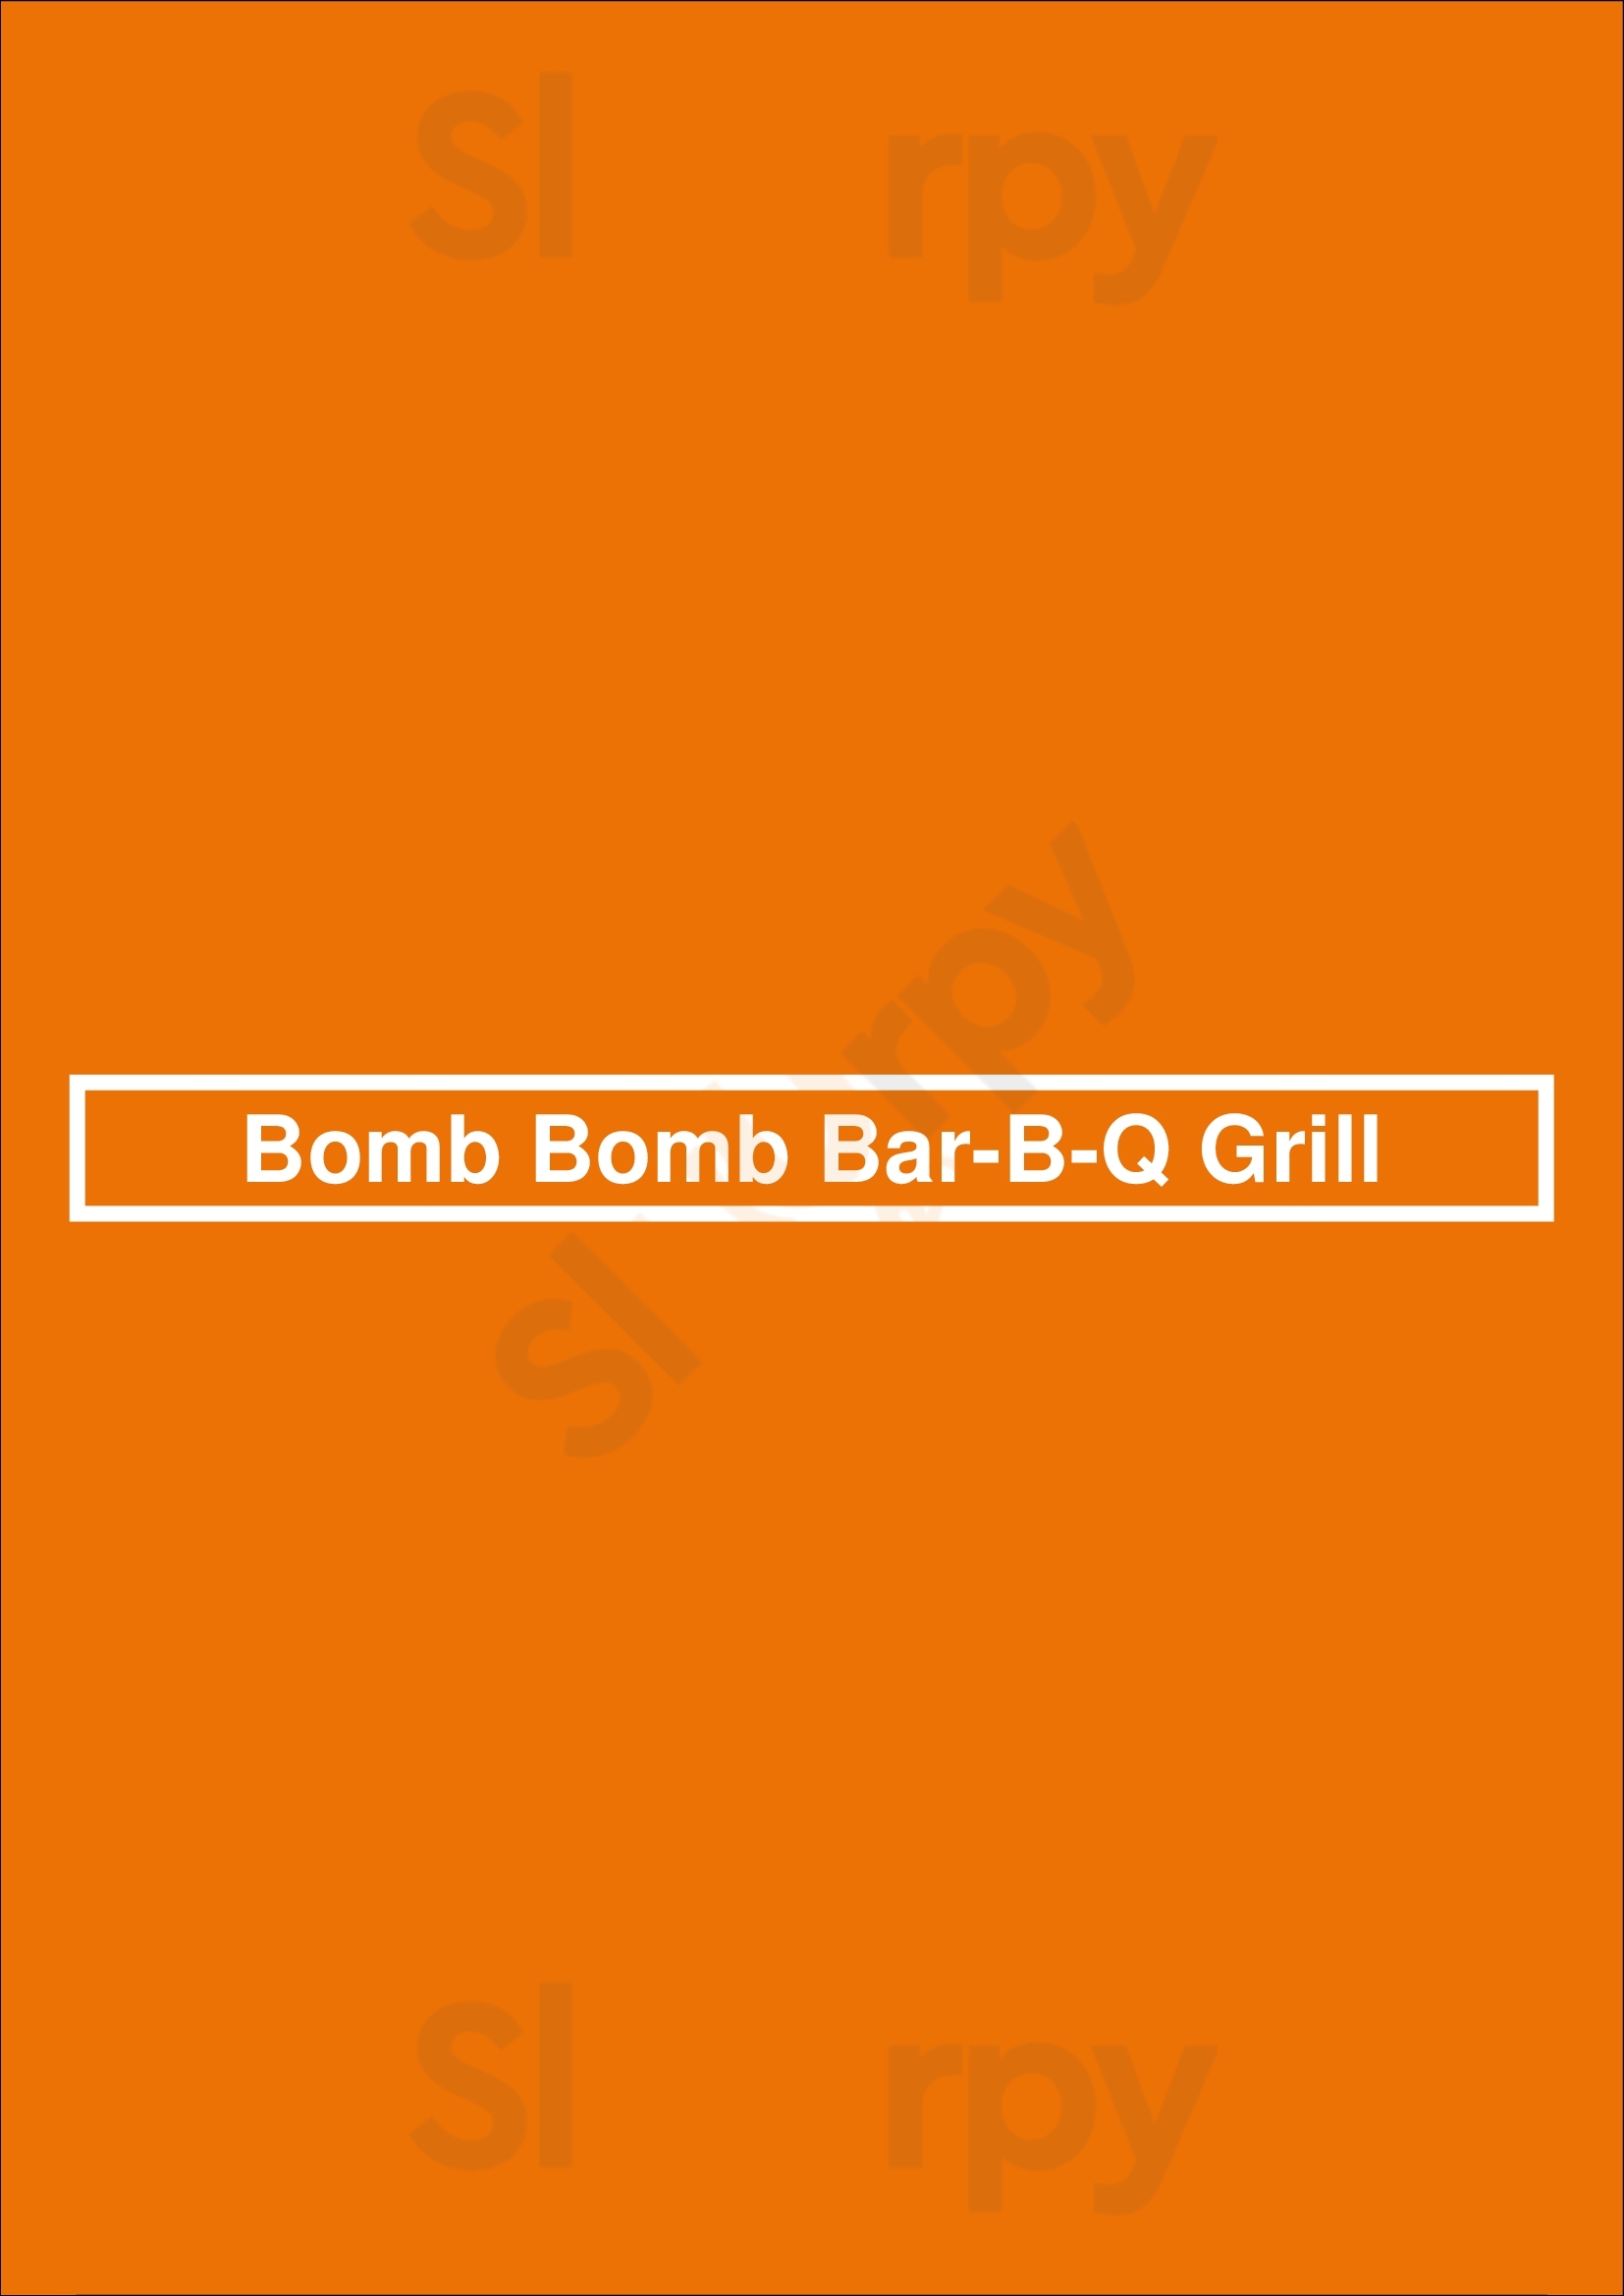 Bomb Bomb Restaurant Philadelphia Menu - 1